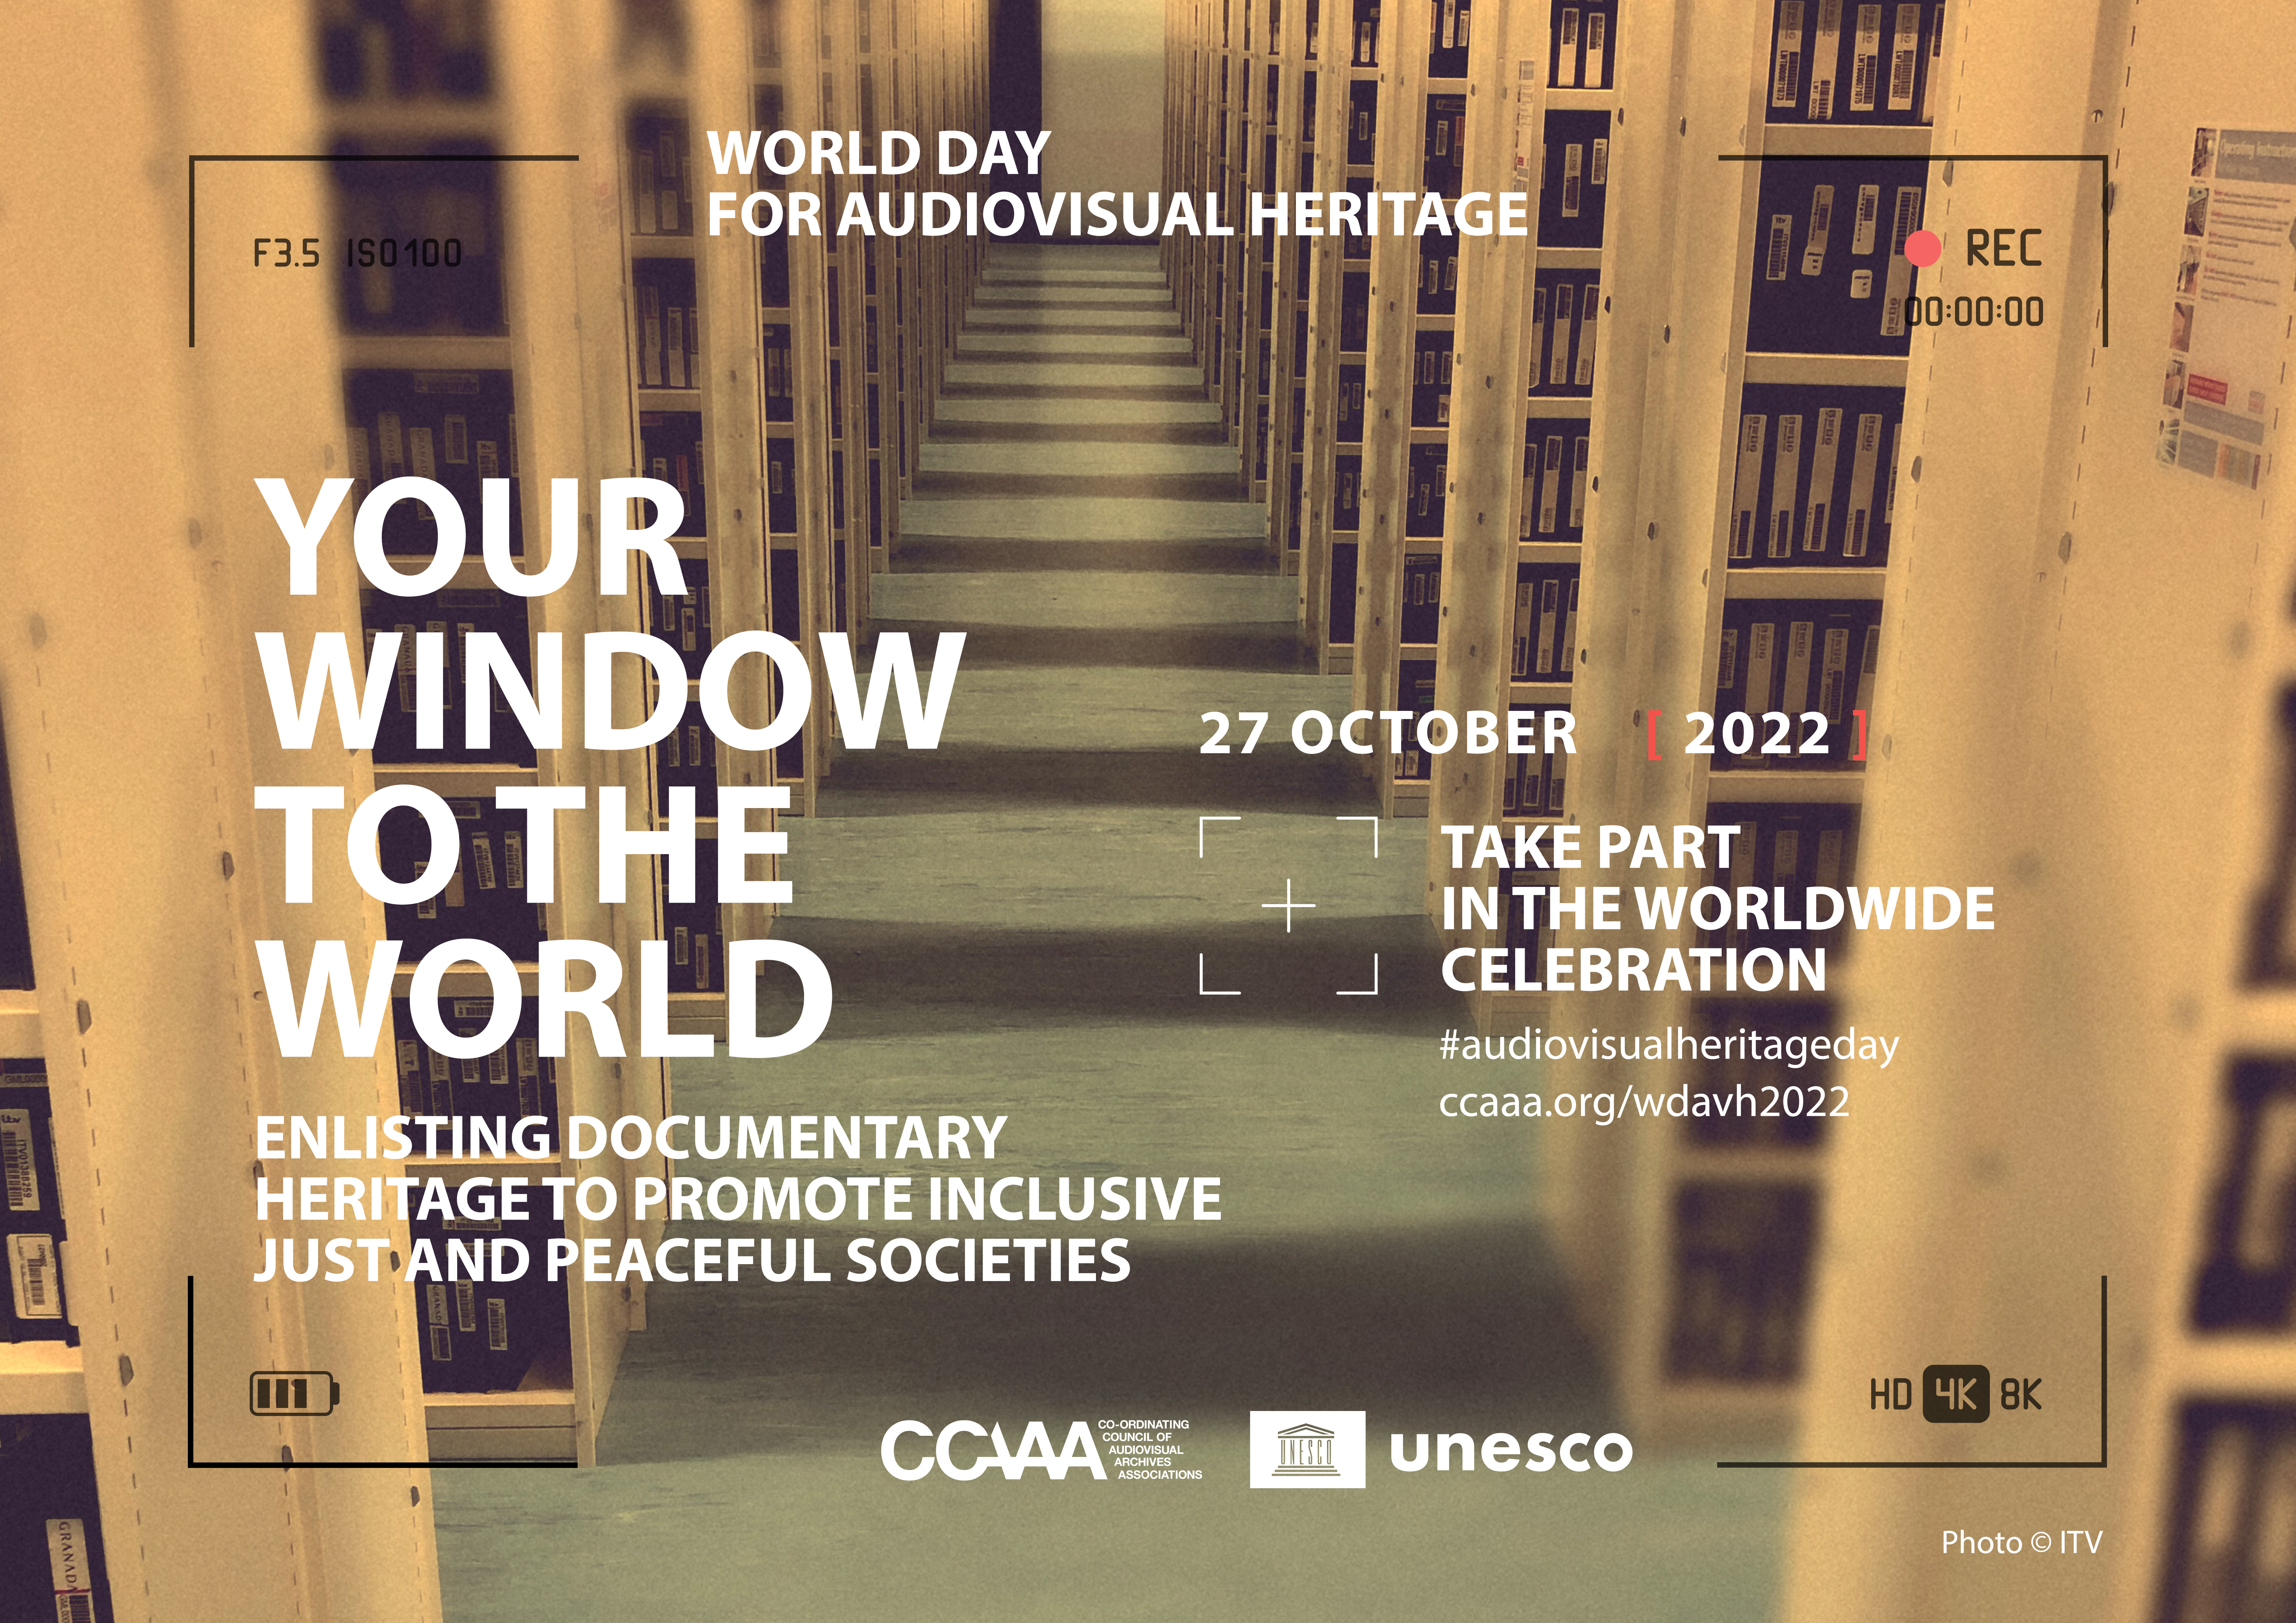 CCAAA - 2022 World Day for Audiovisual Heritage